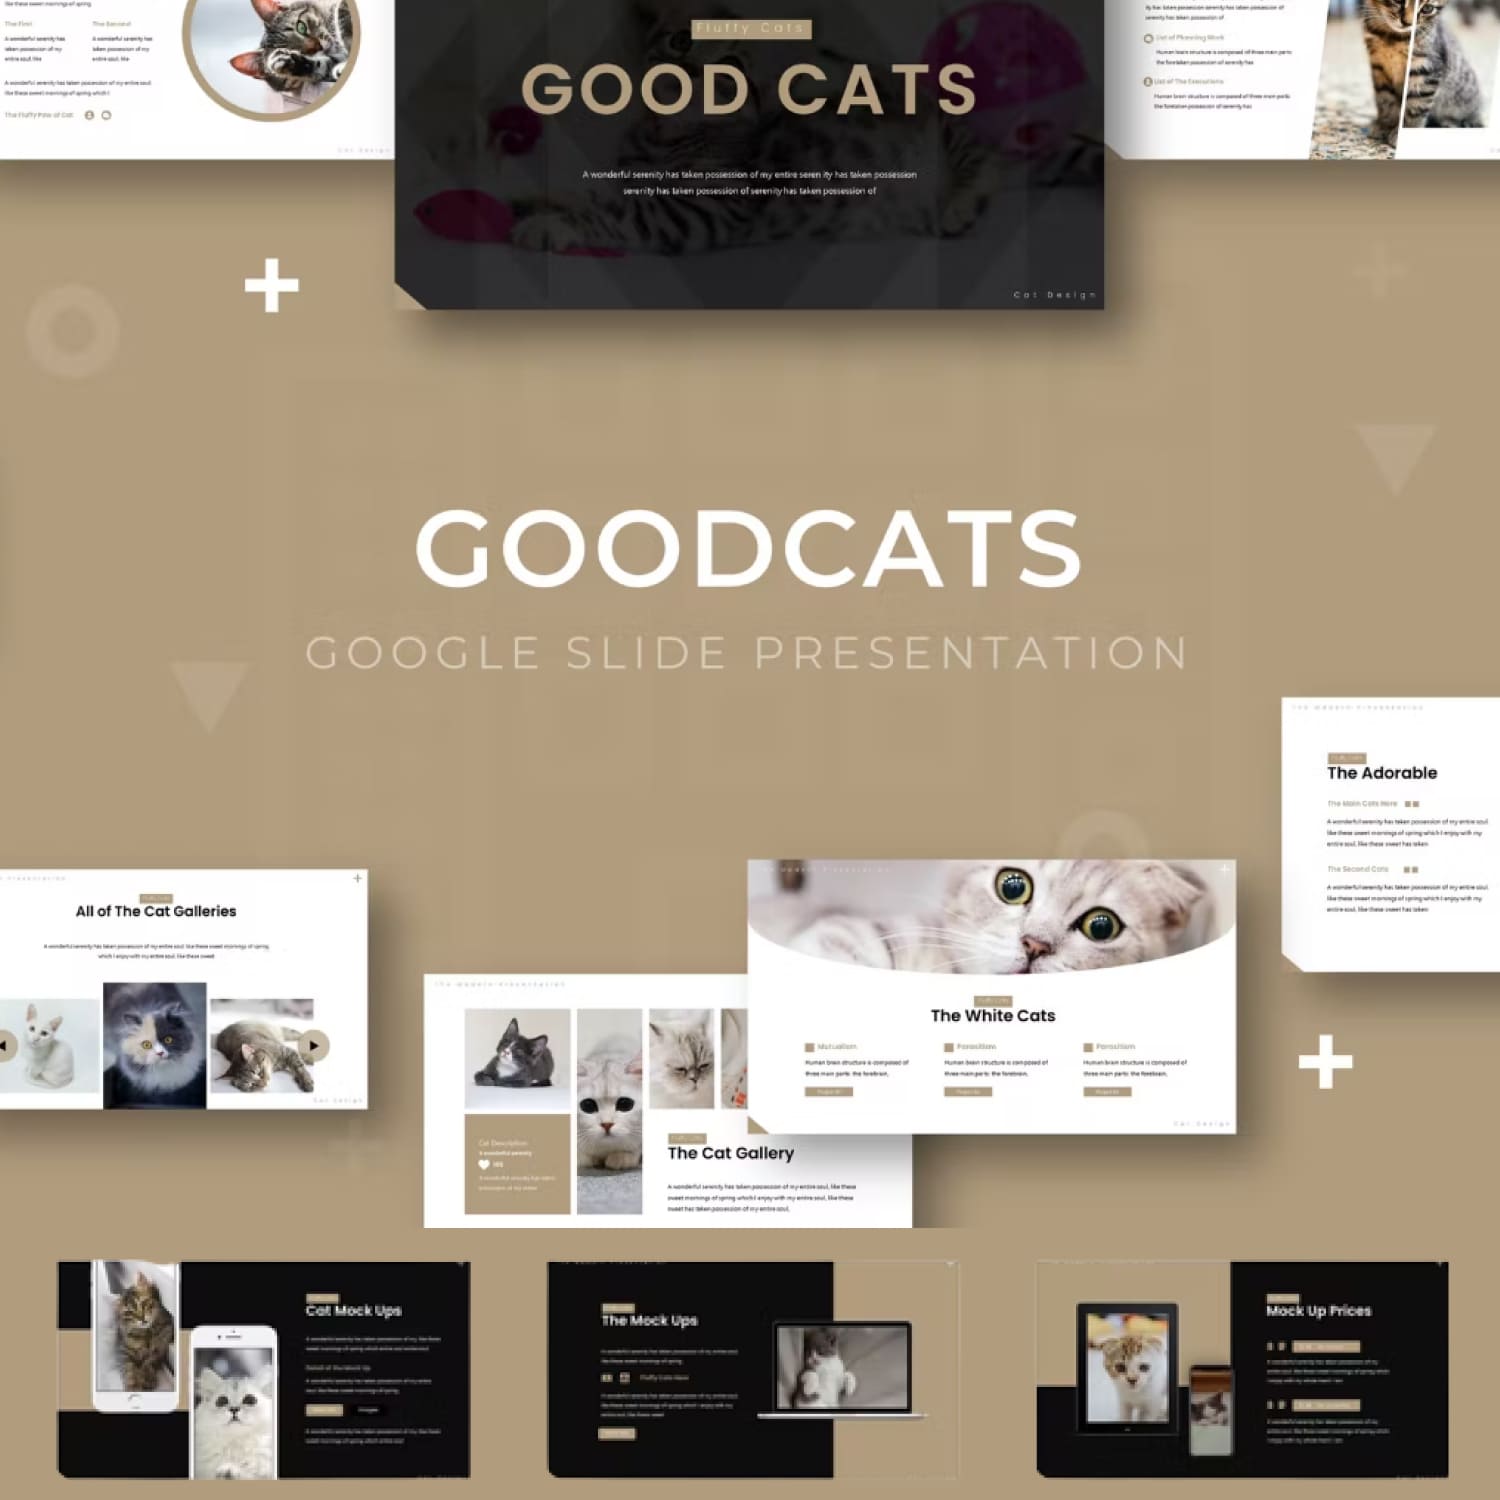 Good cat google slide template - main image preview.